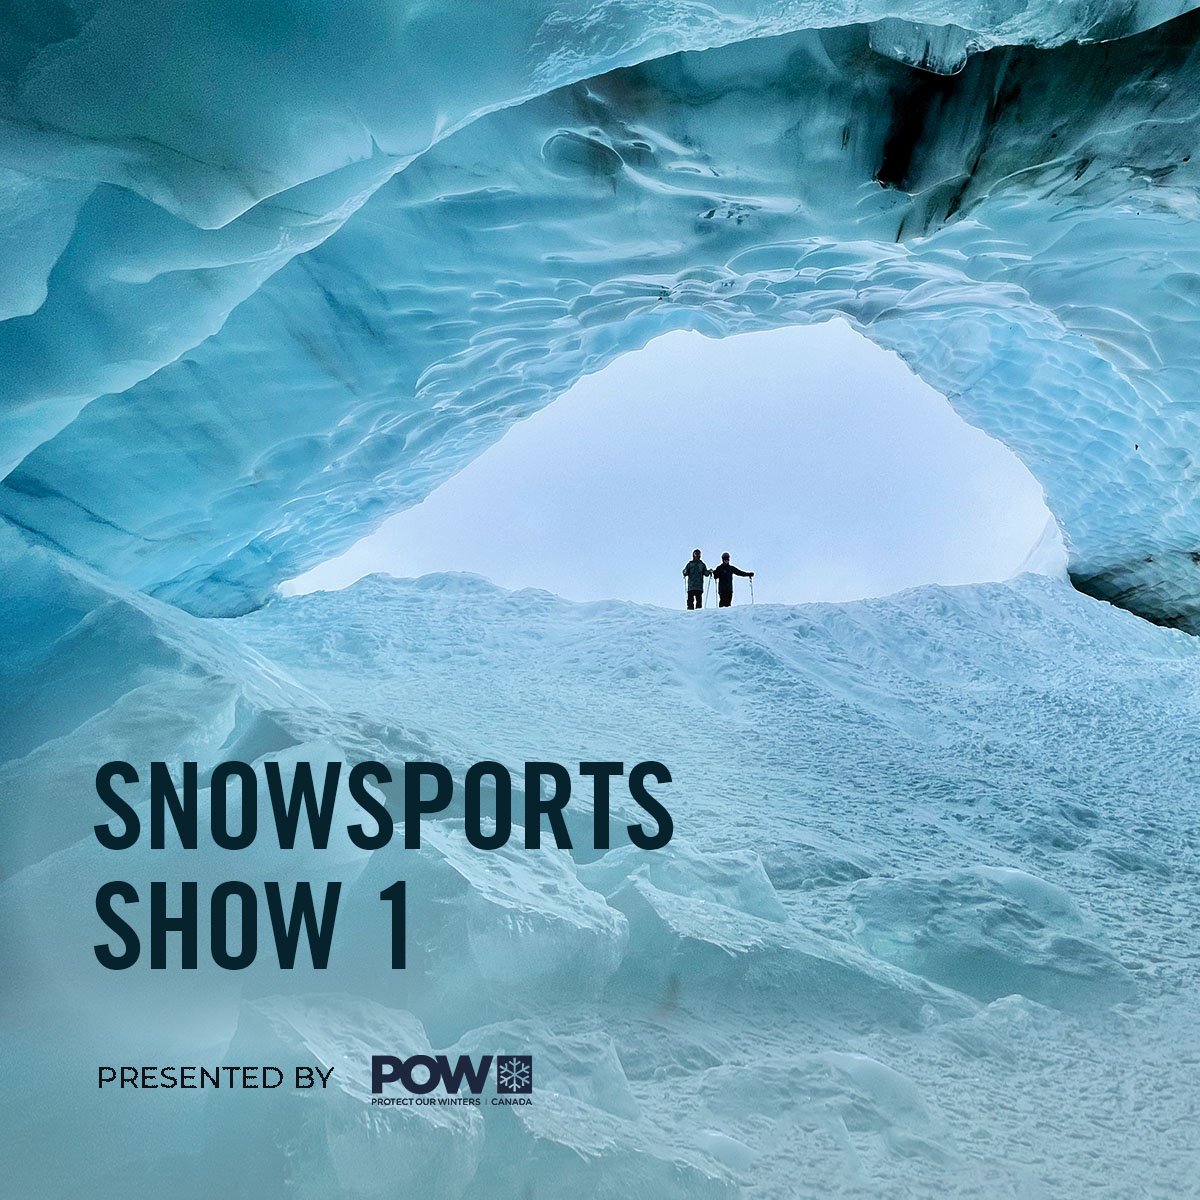 VIMFF Fall Series snowsports show pow x